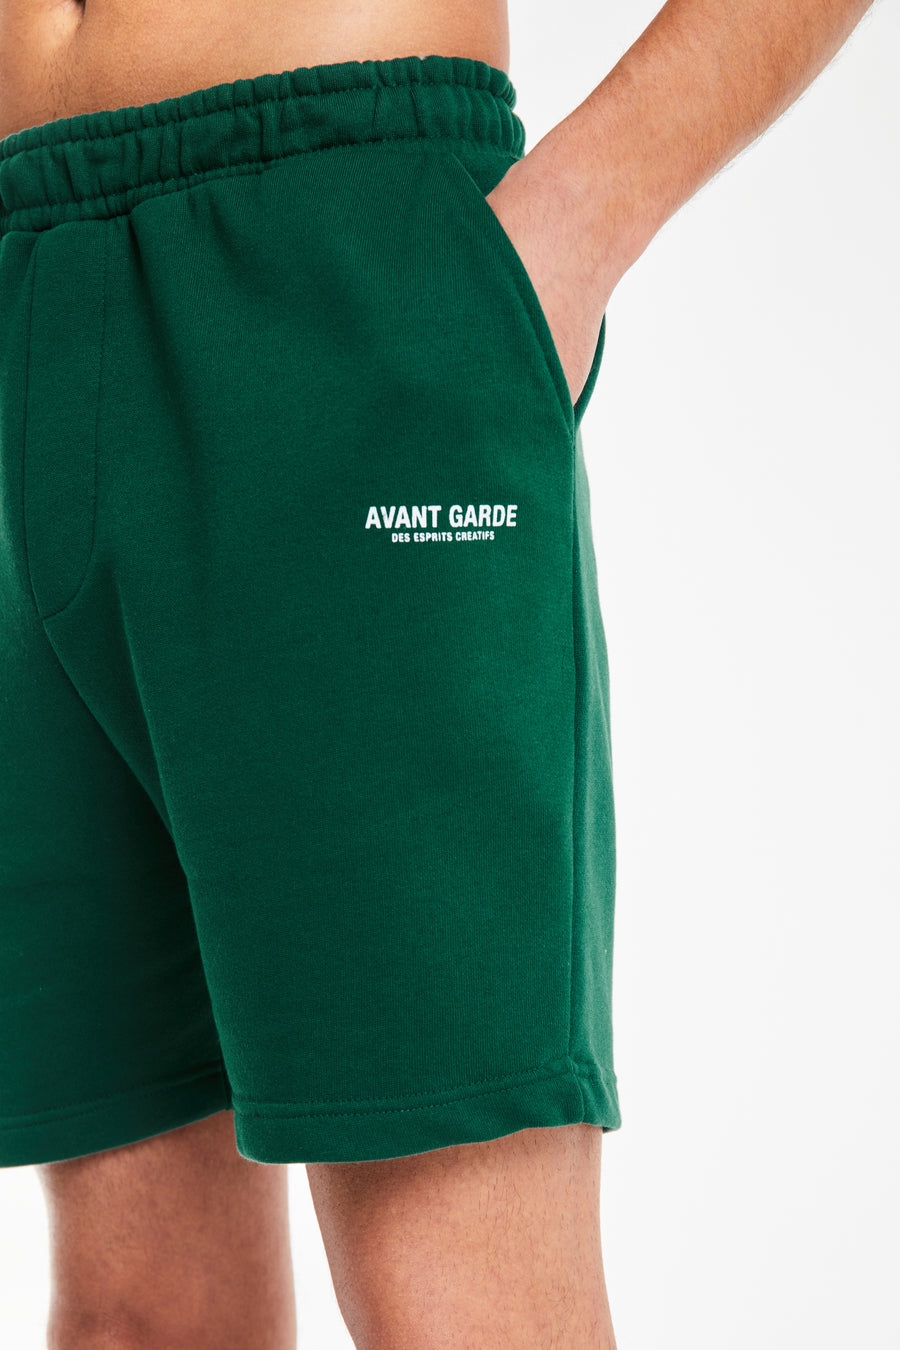 close up of 'avant garde paris' logo on emerald green jersey shorts